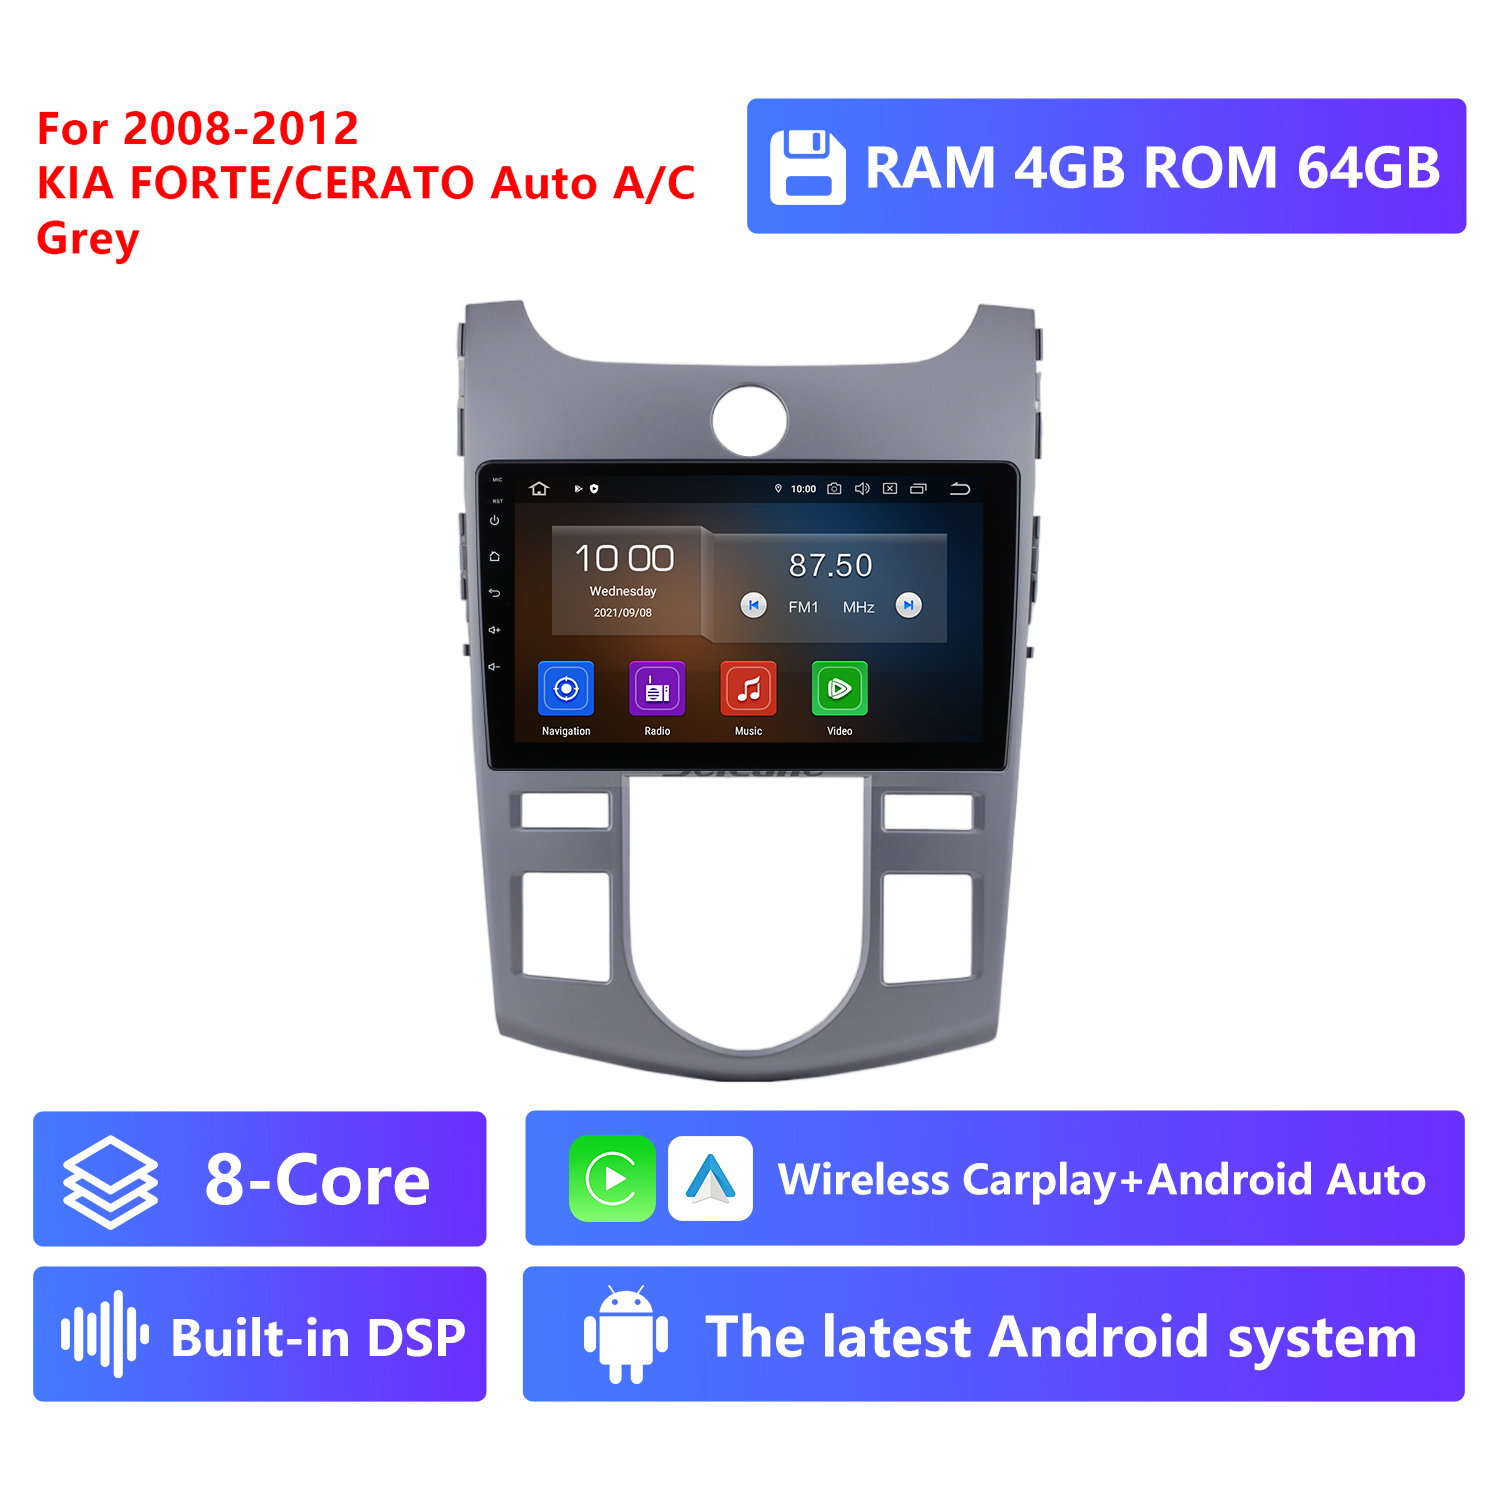 RAM 6G,ROM 66G,Grey